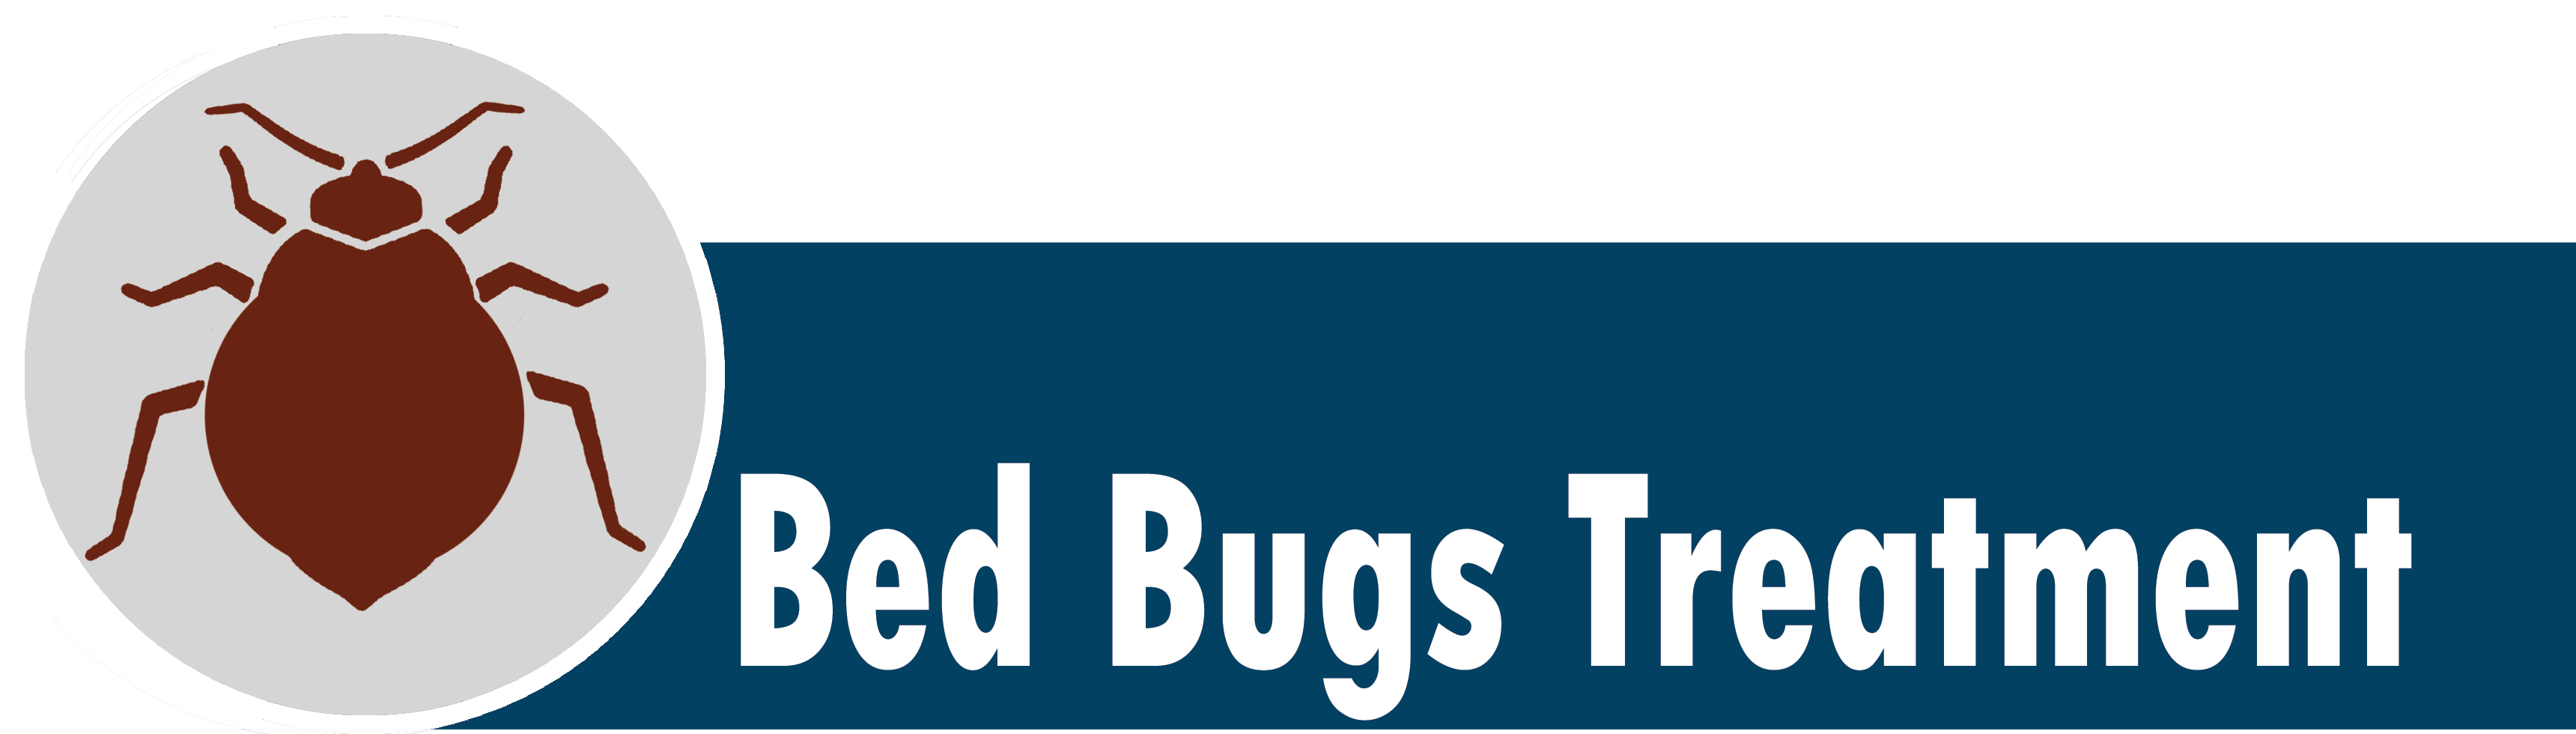 BedbugsTreatment